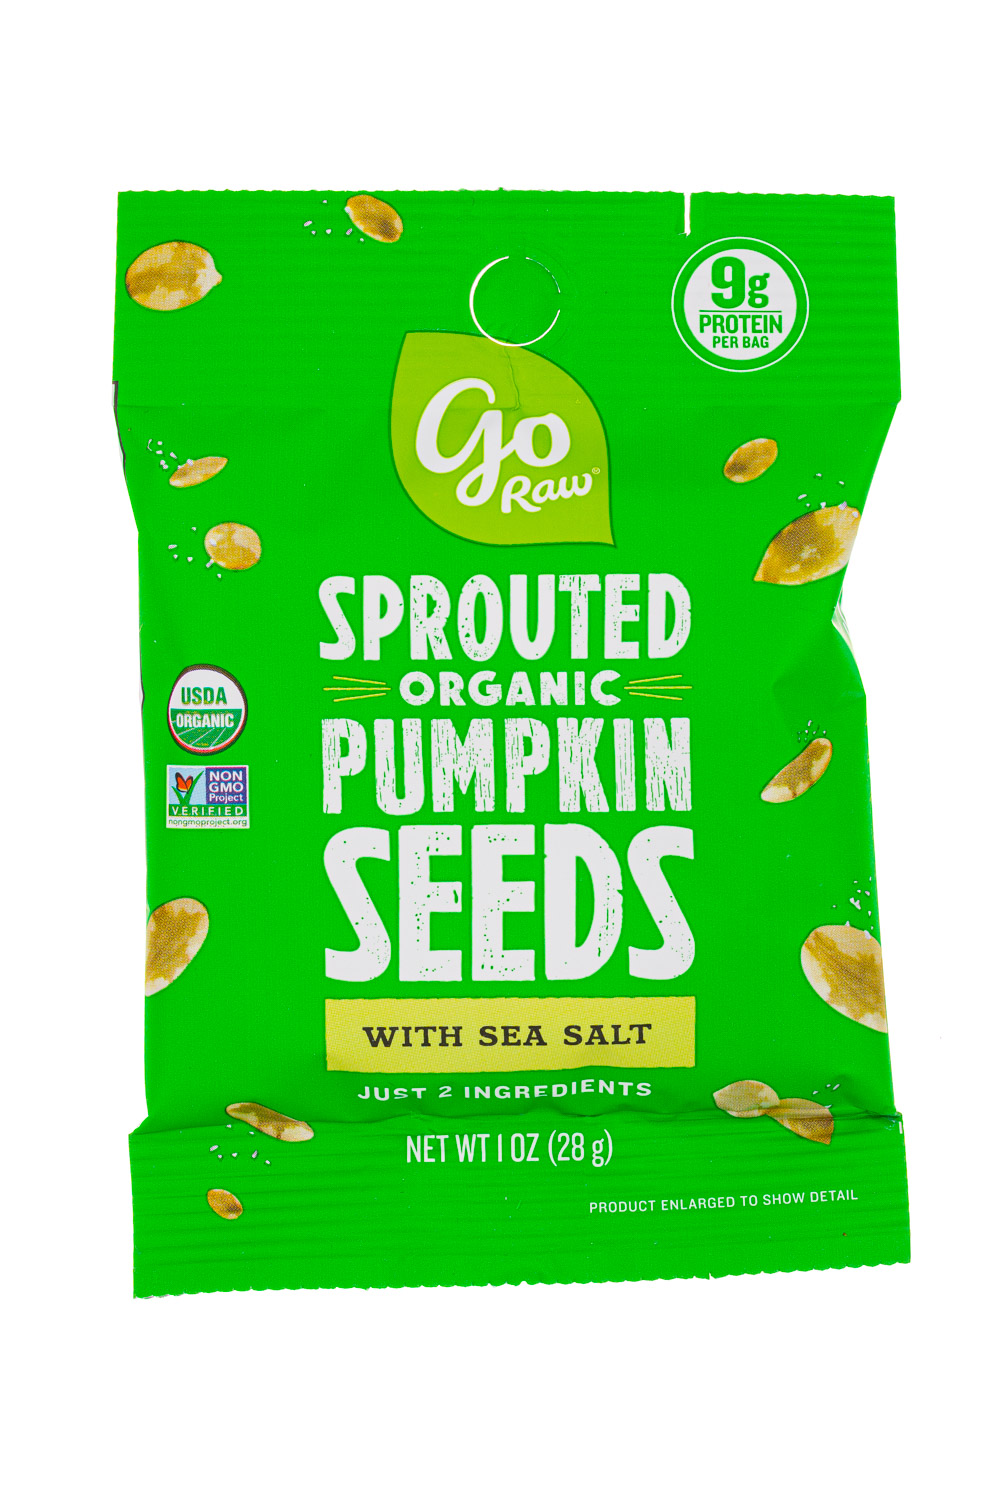 Pumpkin Seeds with Sea Salt